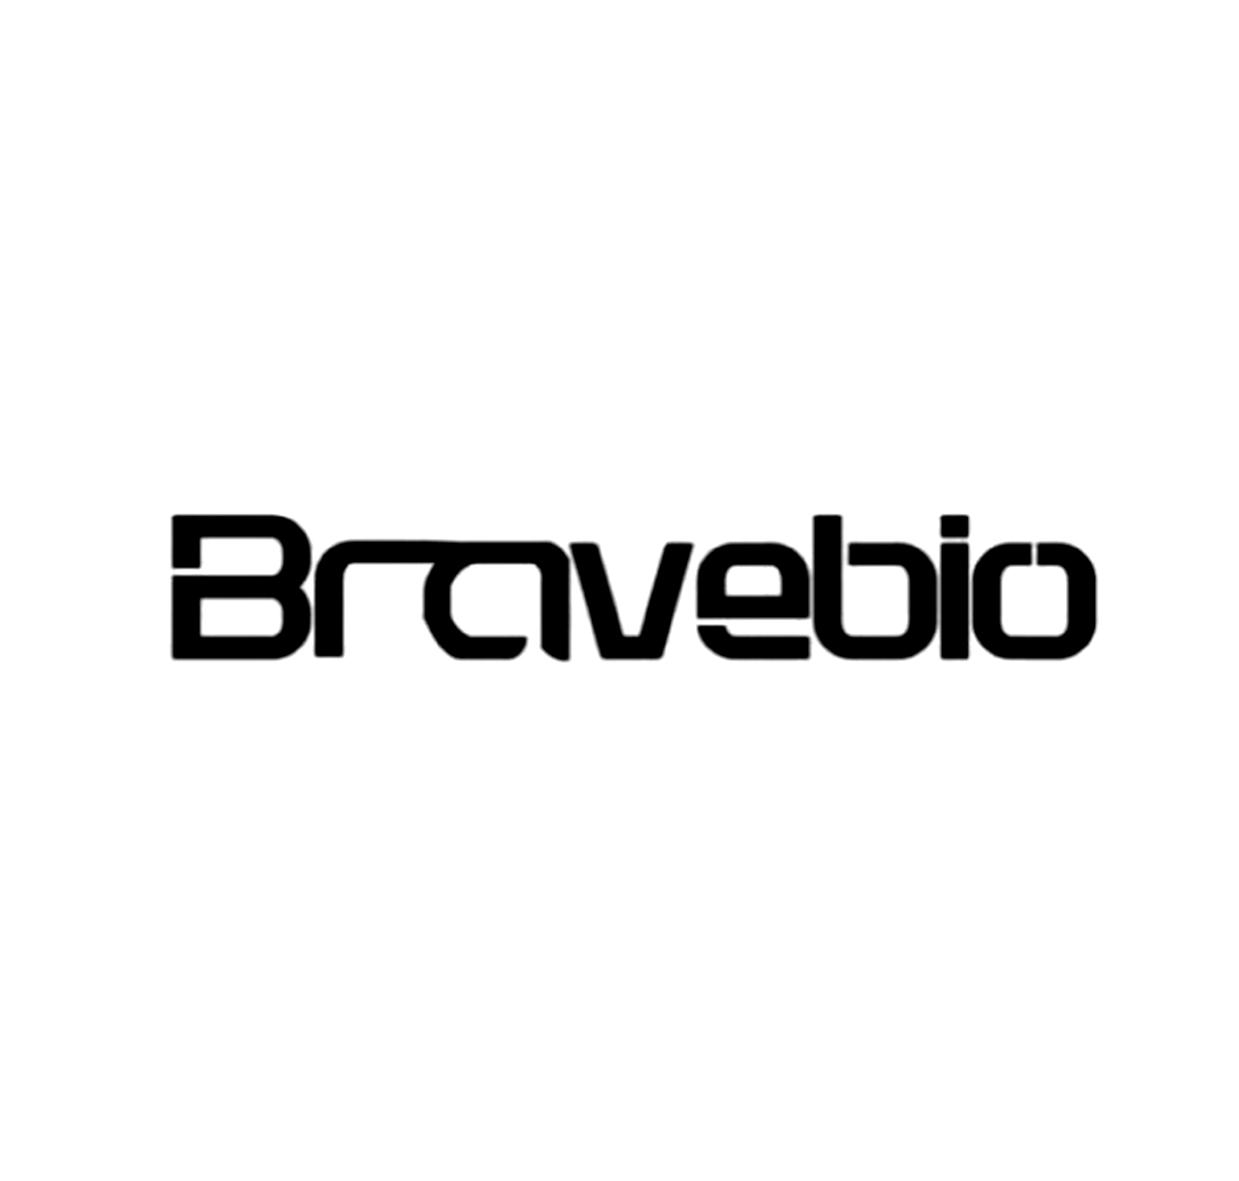 BRAVEBIO 商标公告